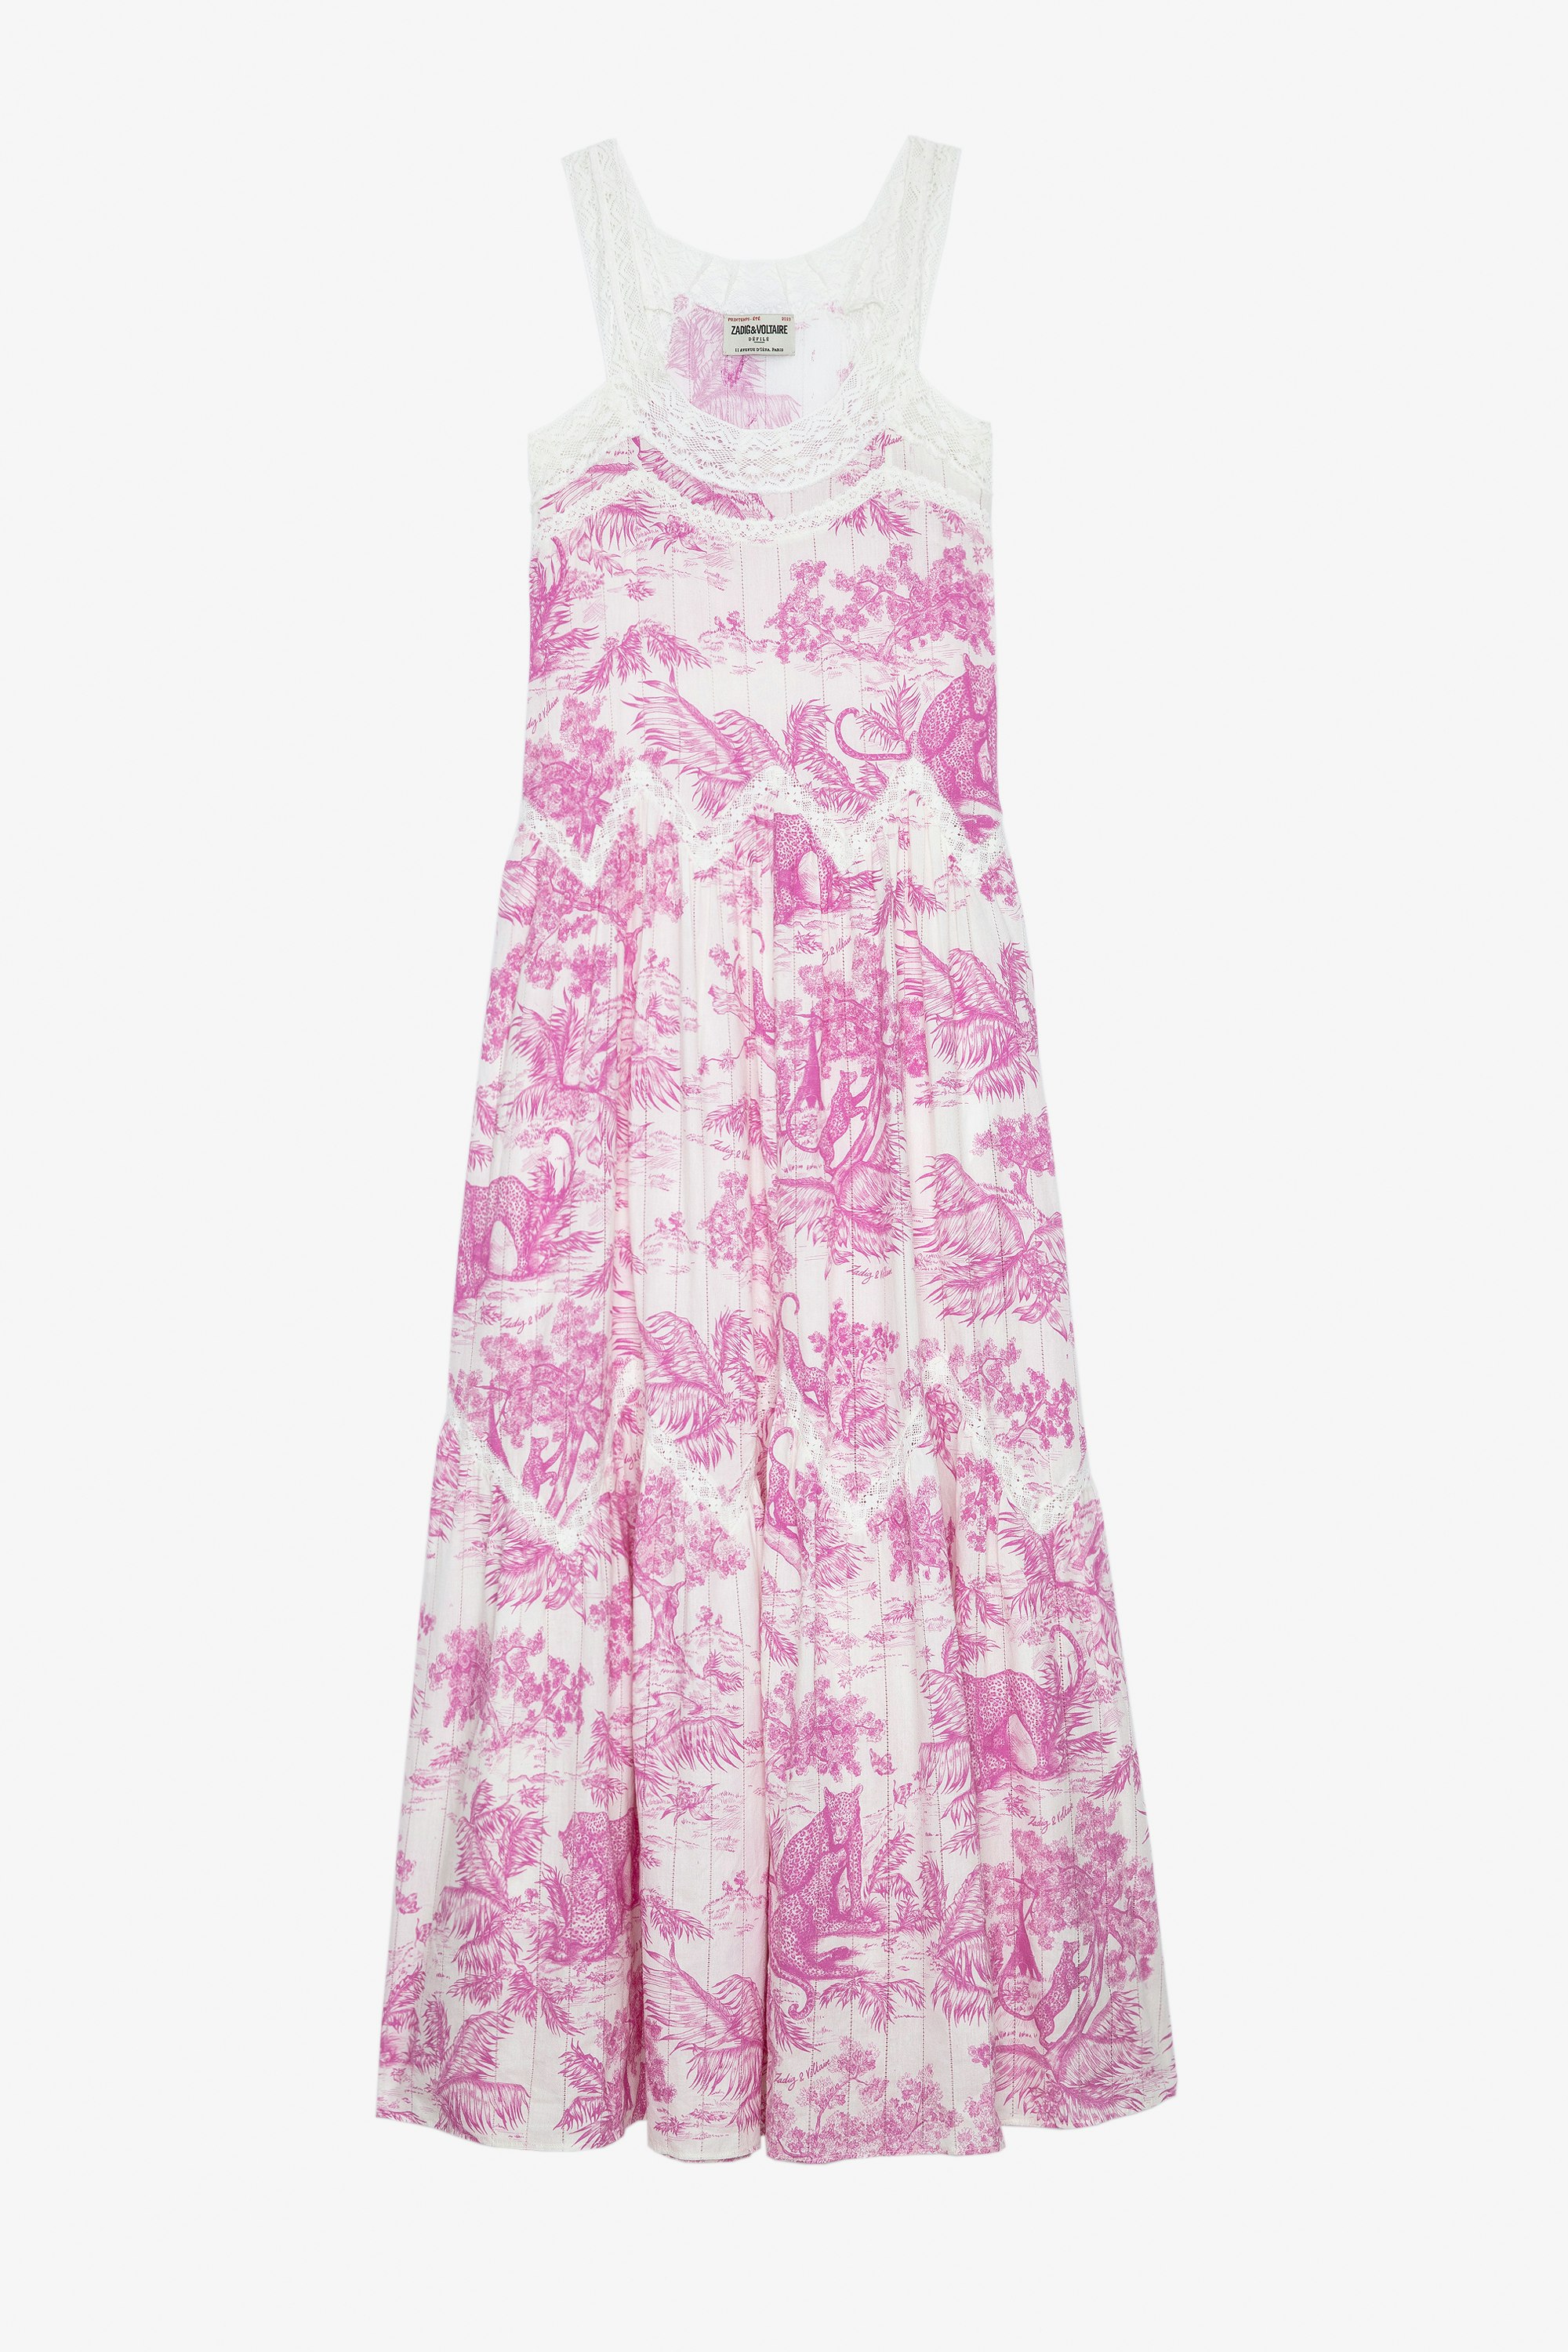 Recloud Dress Women's draped long pink cotton dress featuring Toile-de-Jouy and lace strips